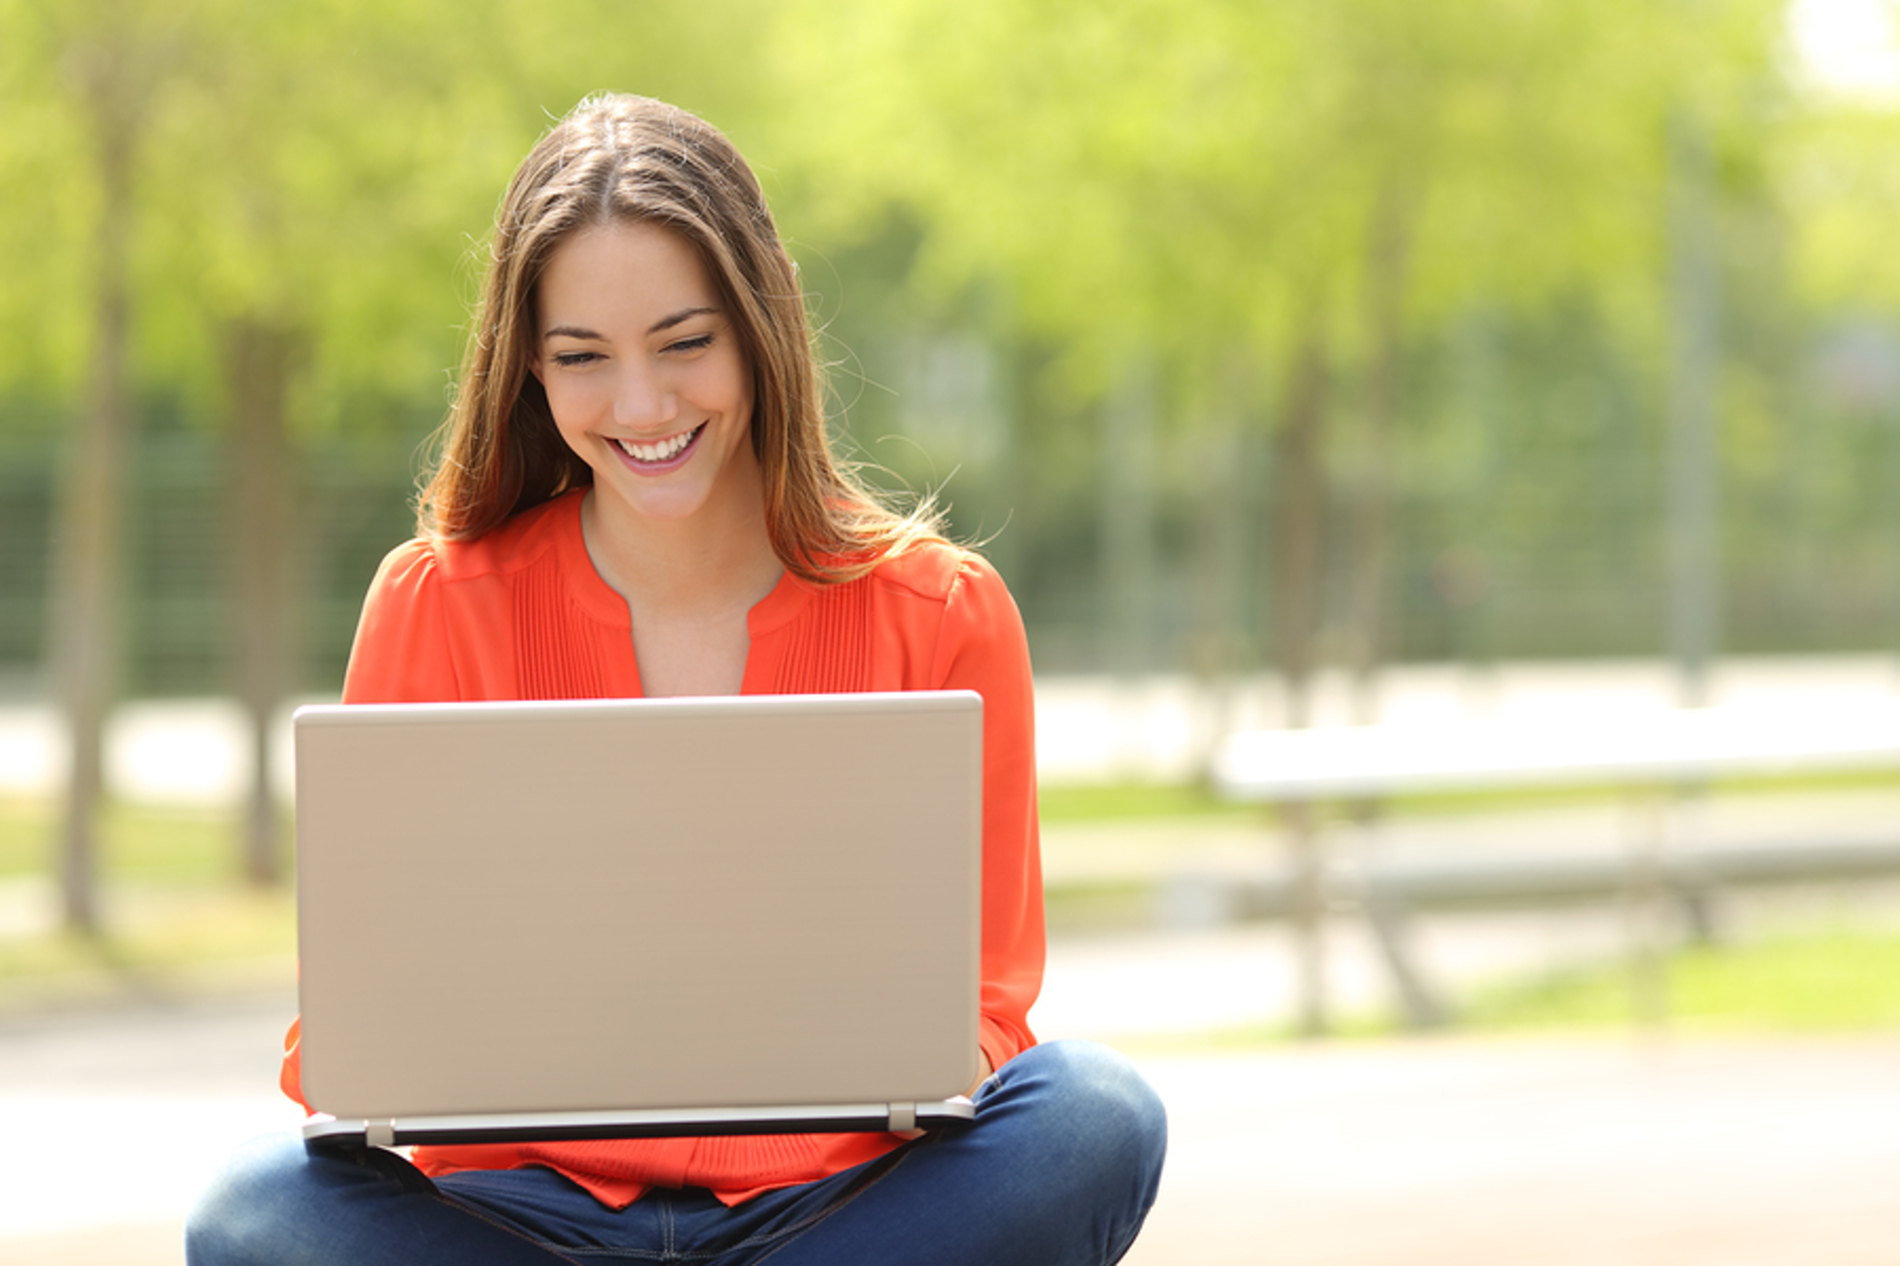 Woman sitting outside using a laptop.